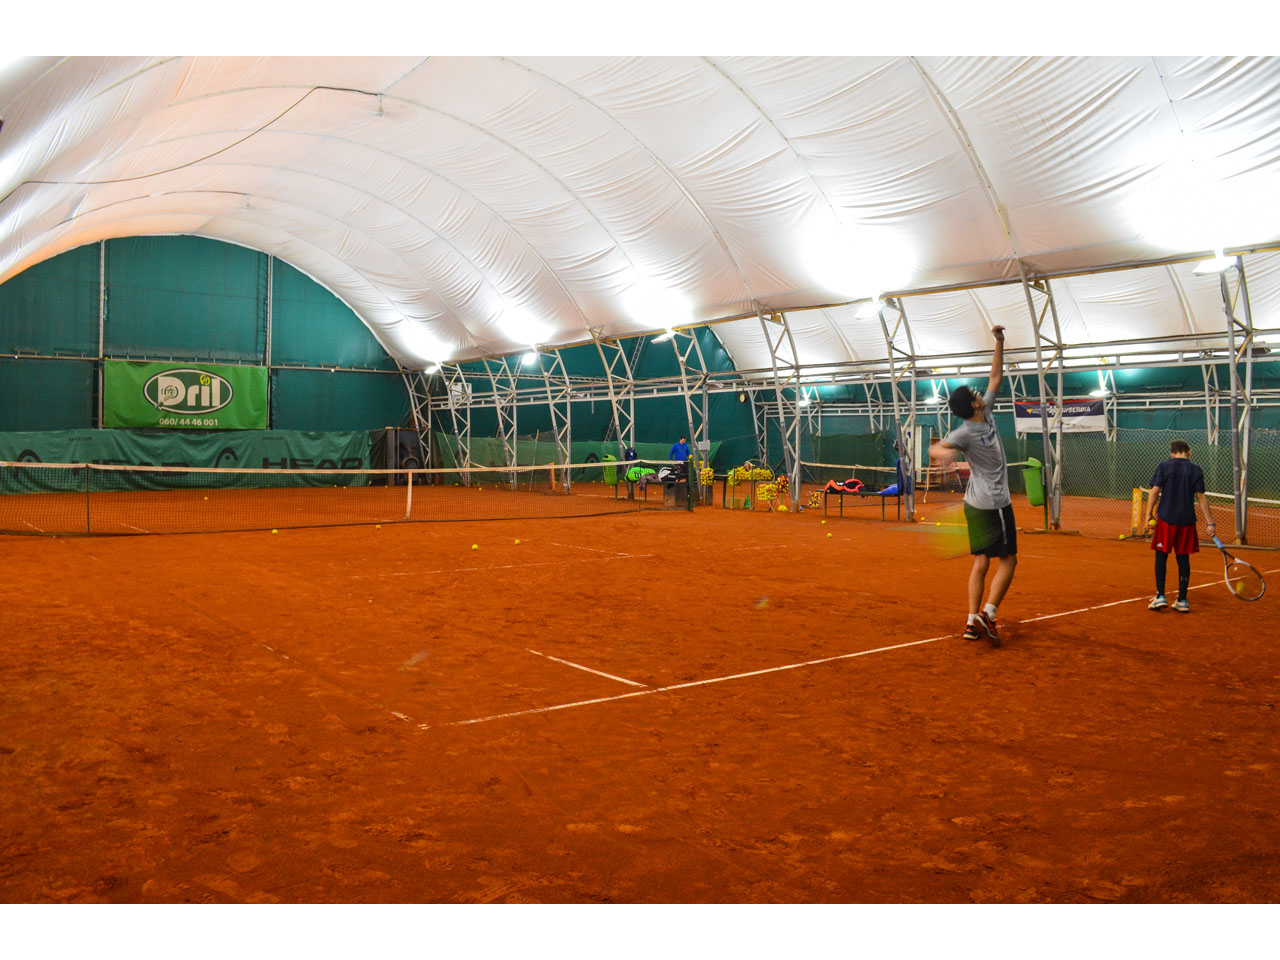 DRIL TENNIS CLUB Tennis courts, tennis schools, tennis clubs Belgrade - Photo 5